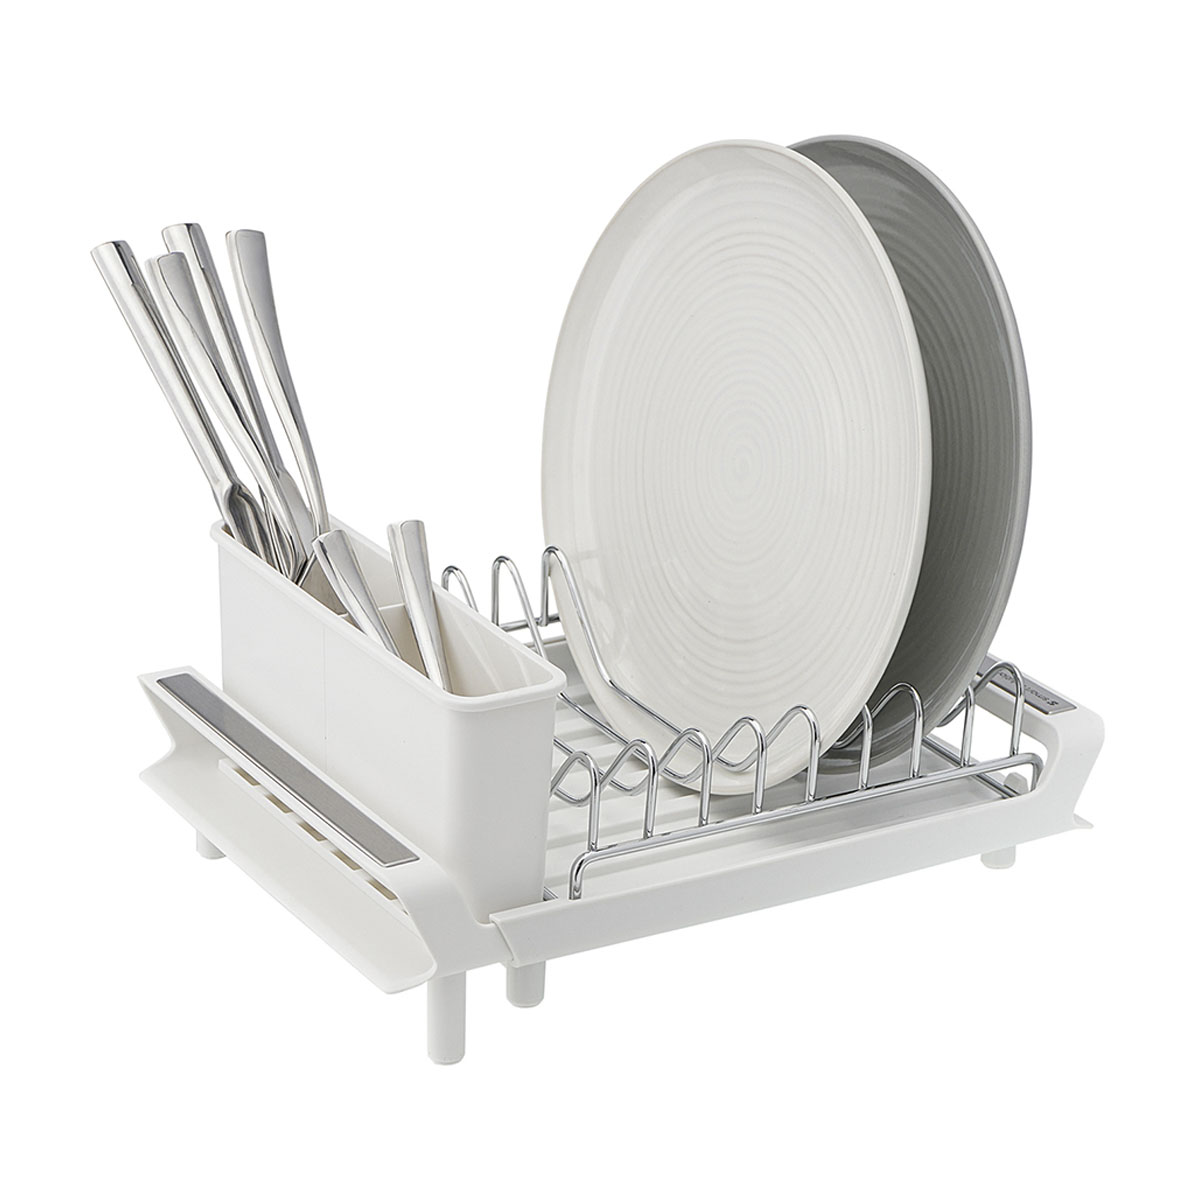 Сушилка для посуды Smart Solutions Atle раздвижная малая, цвет белый сушилка для посуды smart solutions atle раздвижная малая цвет белый